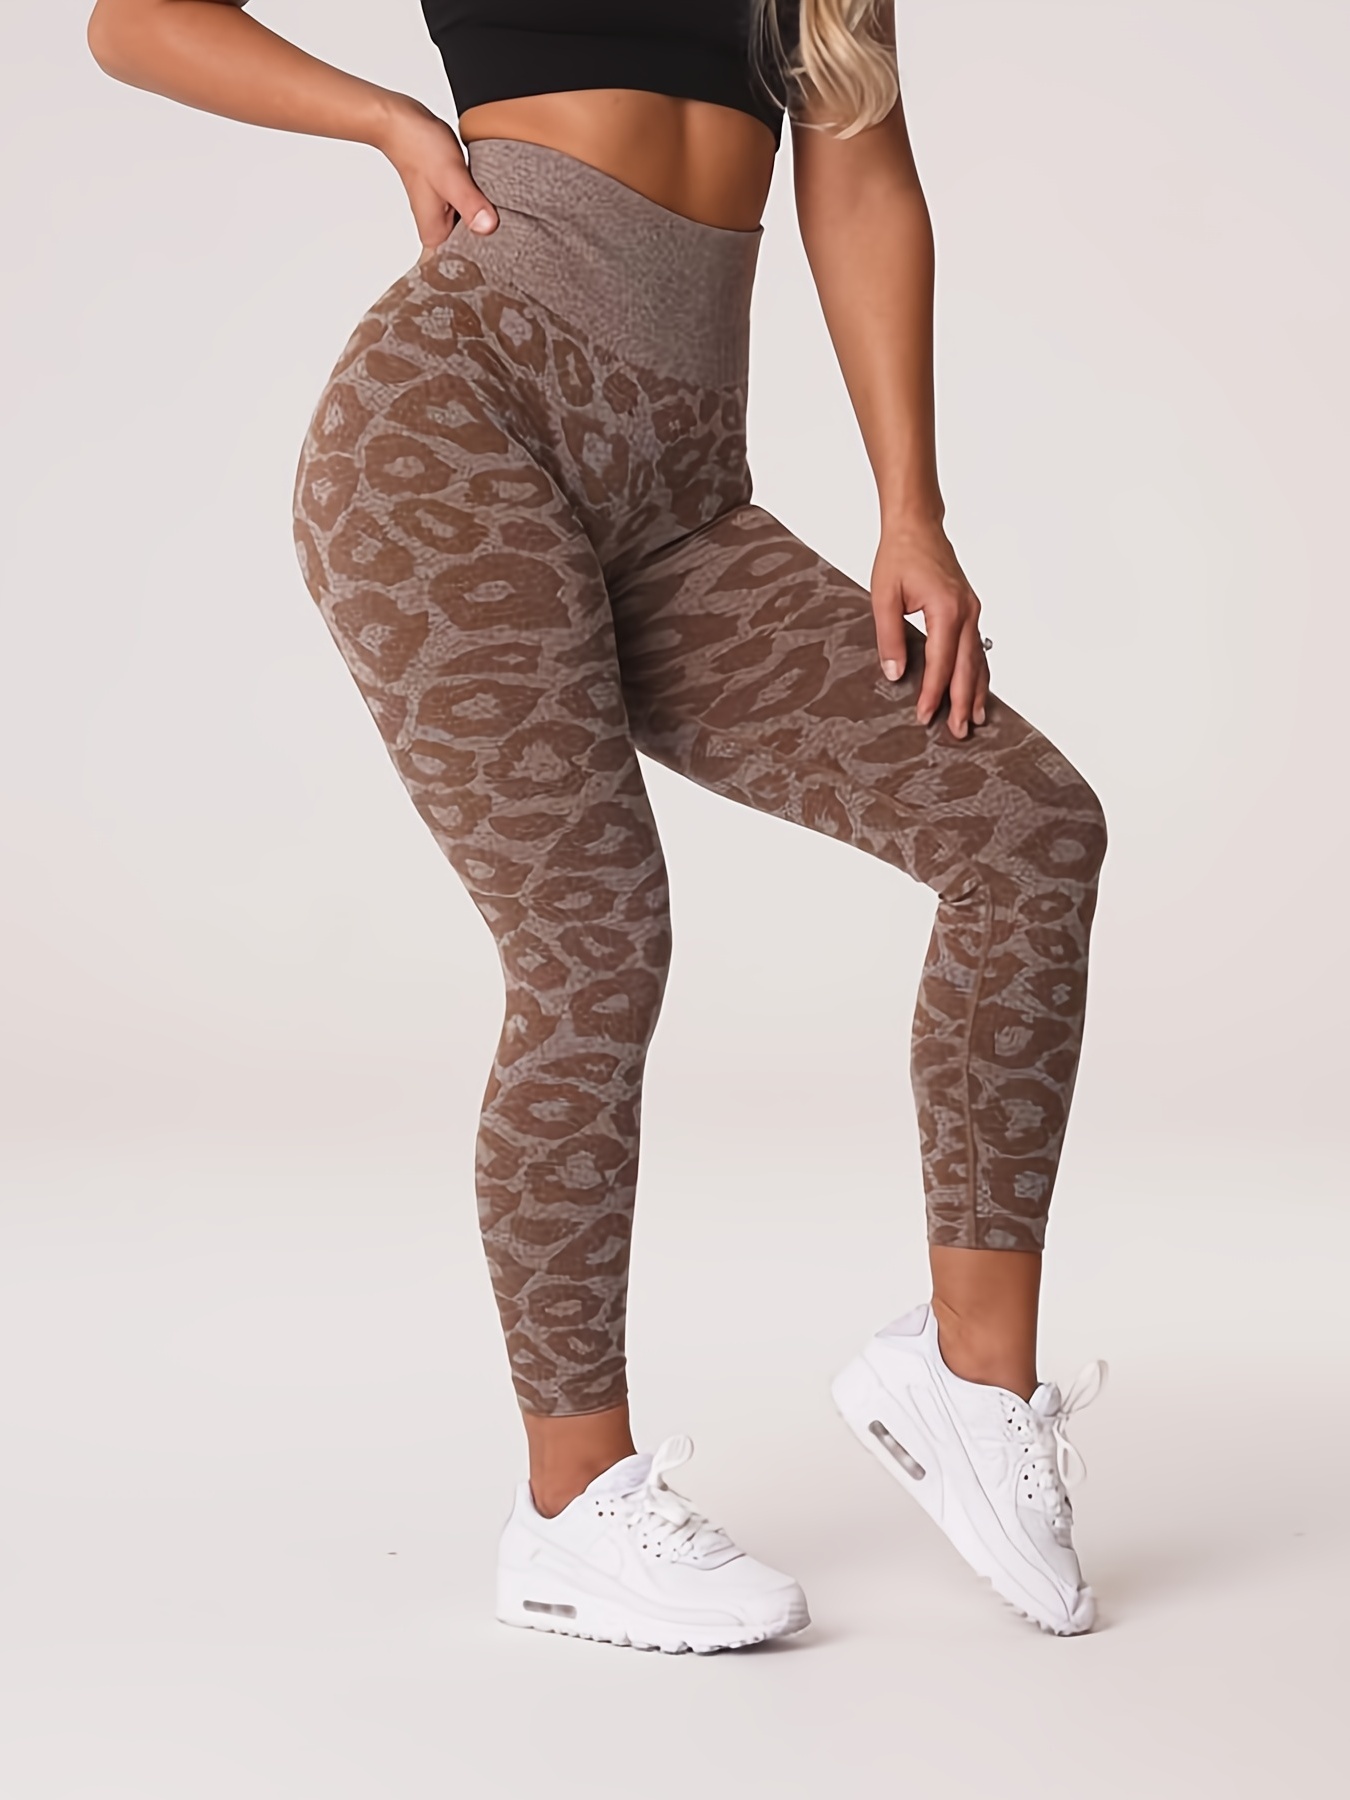  St Day Leopard Brown Printed Yoga Leggings for Women